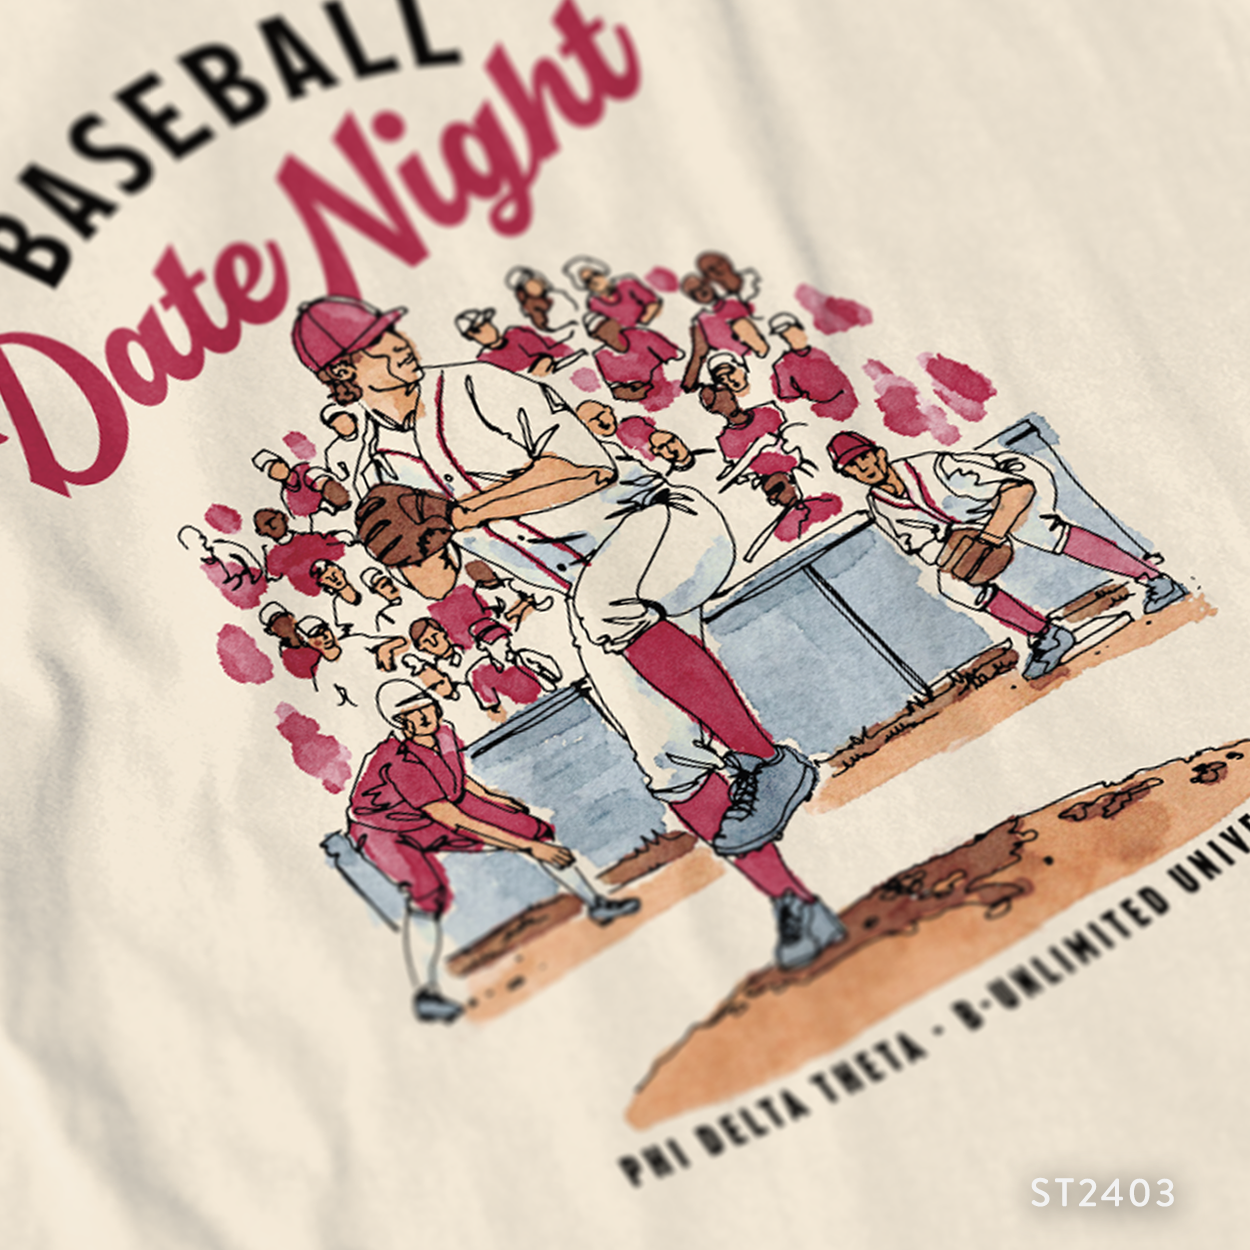 Phi Delta Theta Baseball Date Night T-Shirt Design